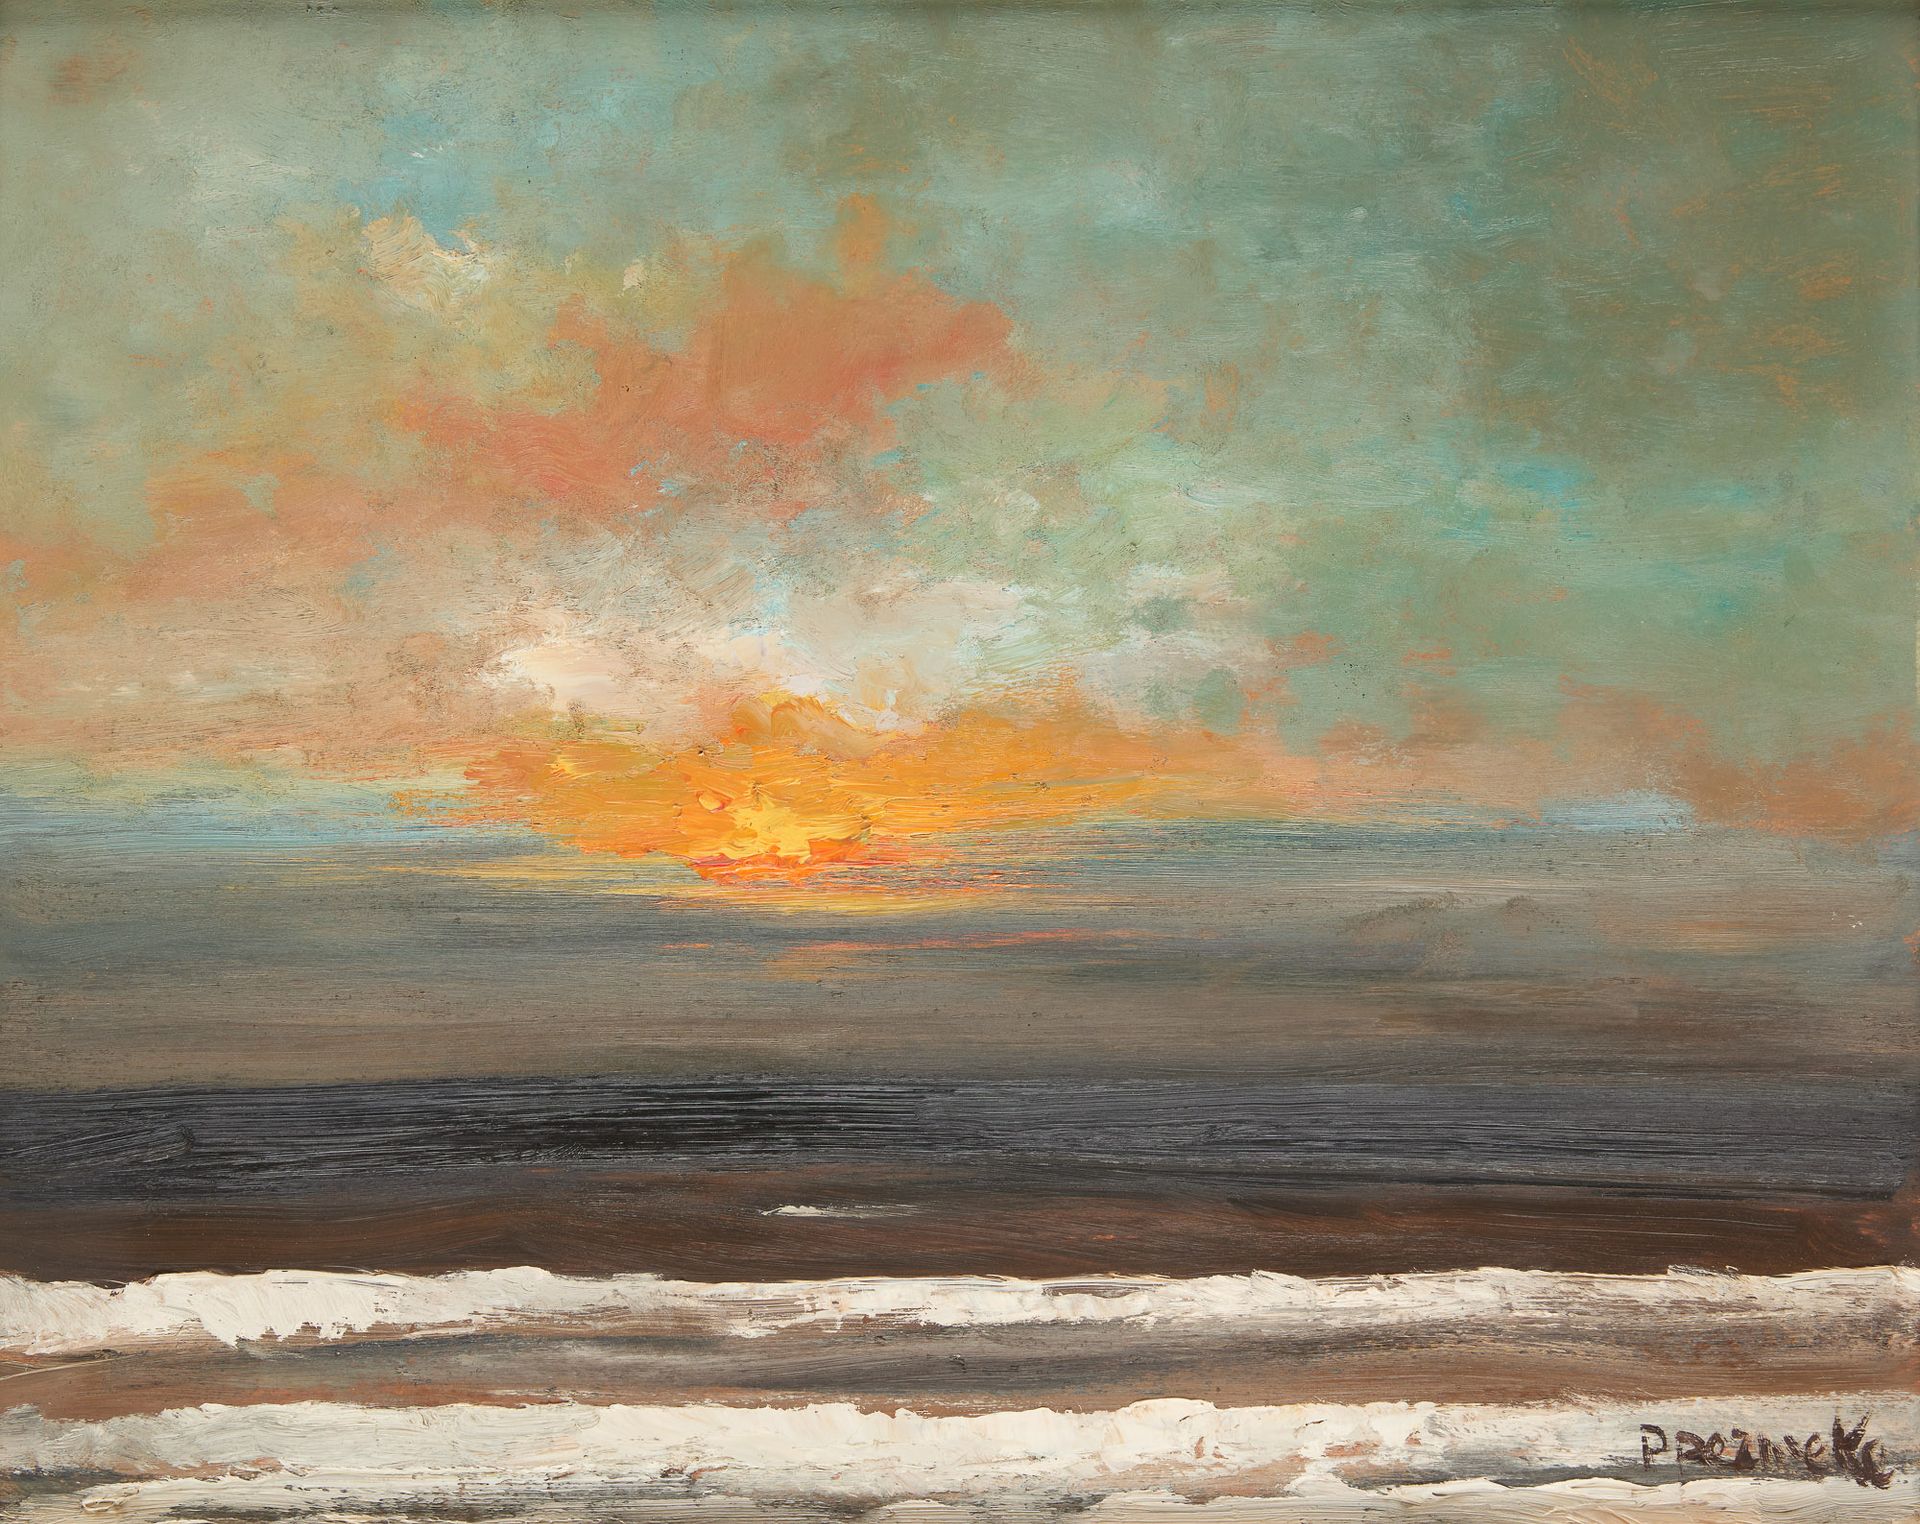 Paul PERMEKE École belge (1918-1990) Oil on panel: Sunset in the North Sea.

Sig&hellip;